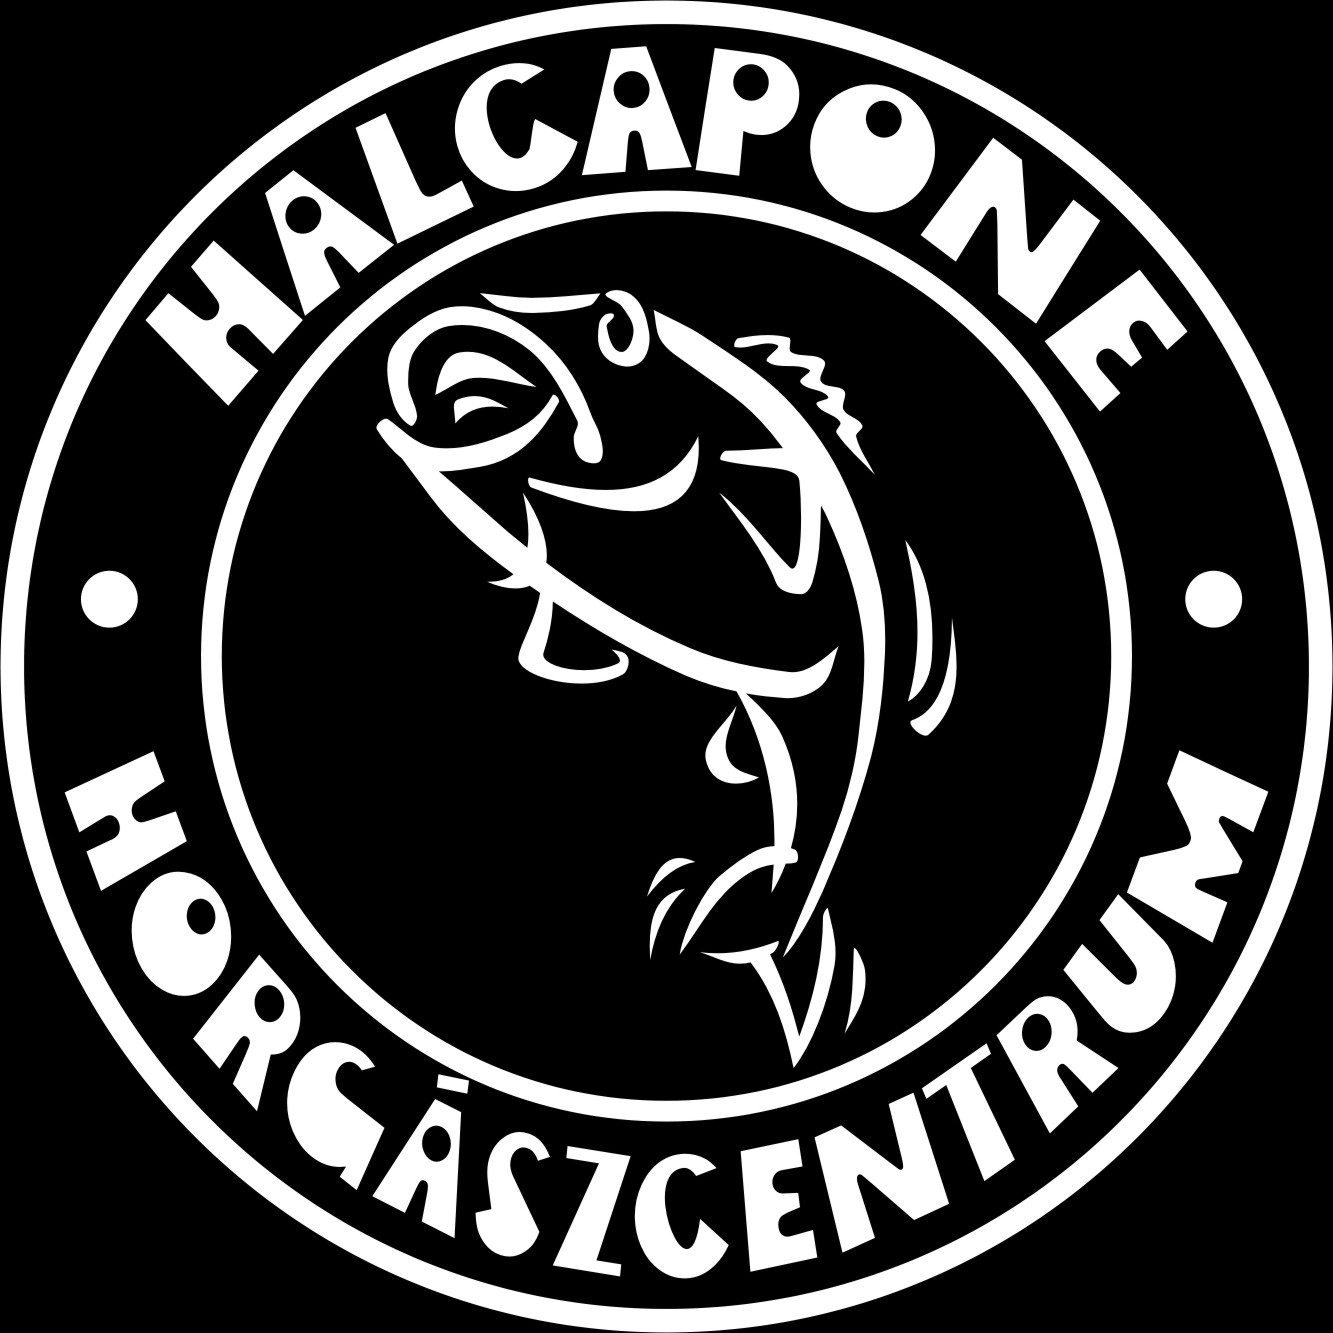 images/halcapone